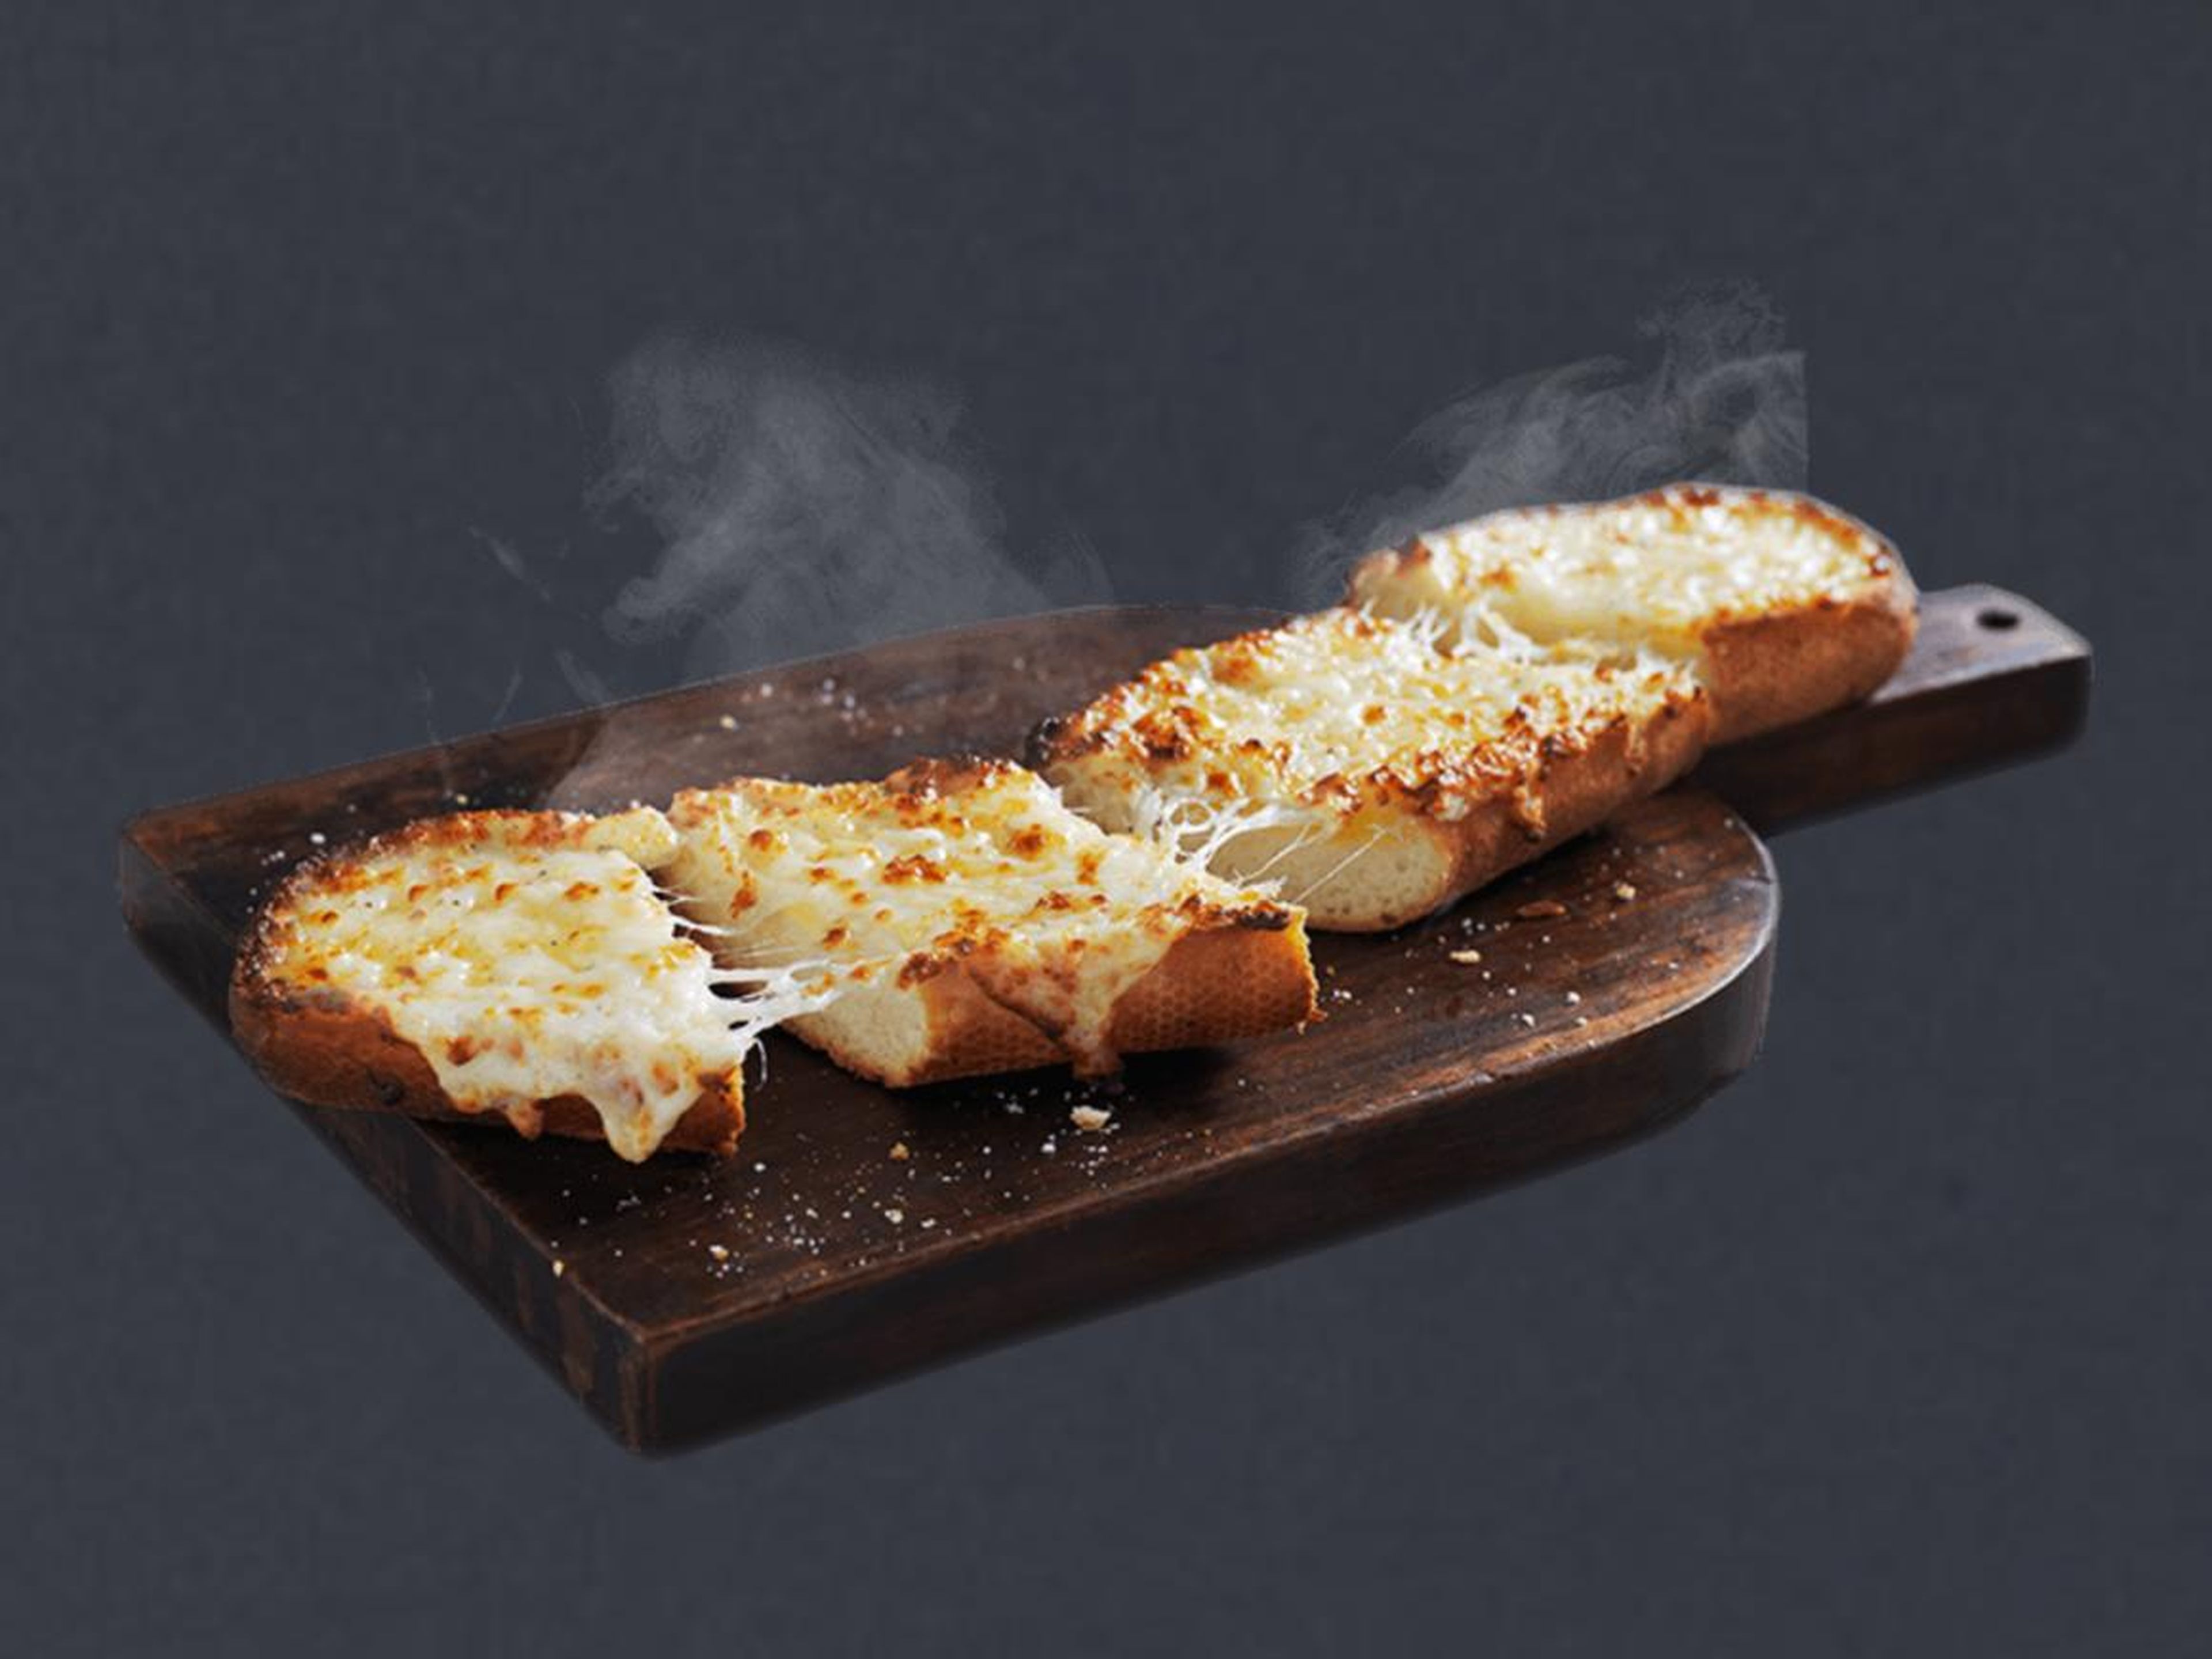 Domino's cheesy garlic bread.